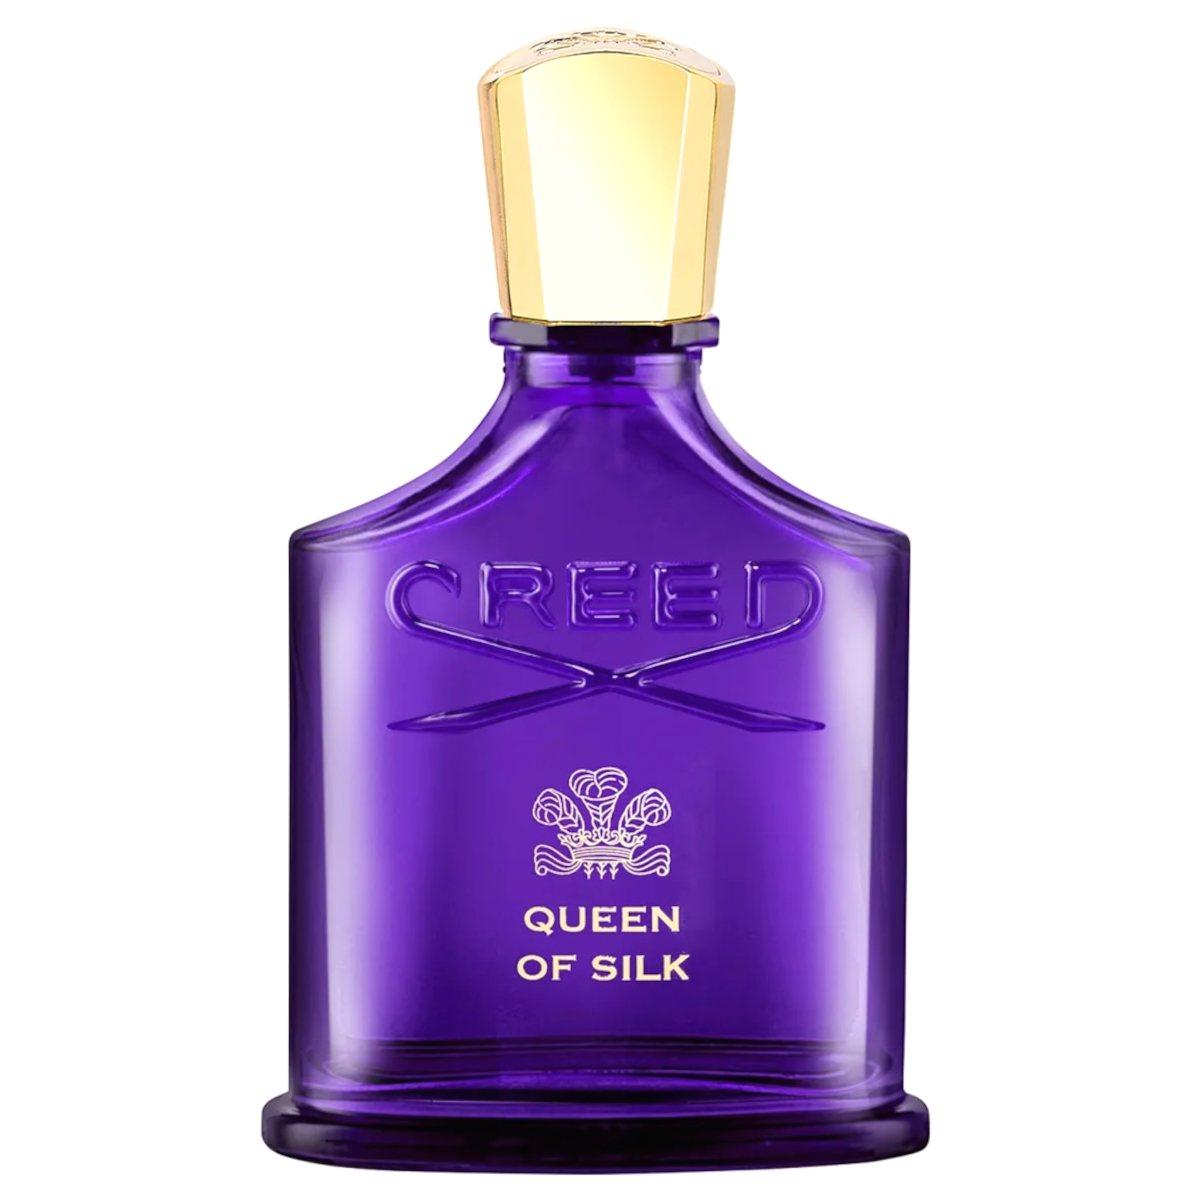 Creed eau de parfum Queen of Silk